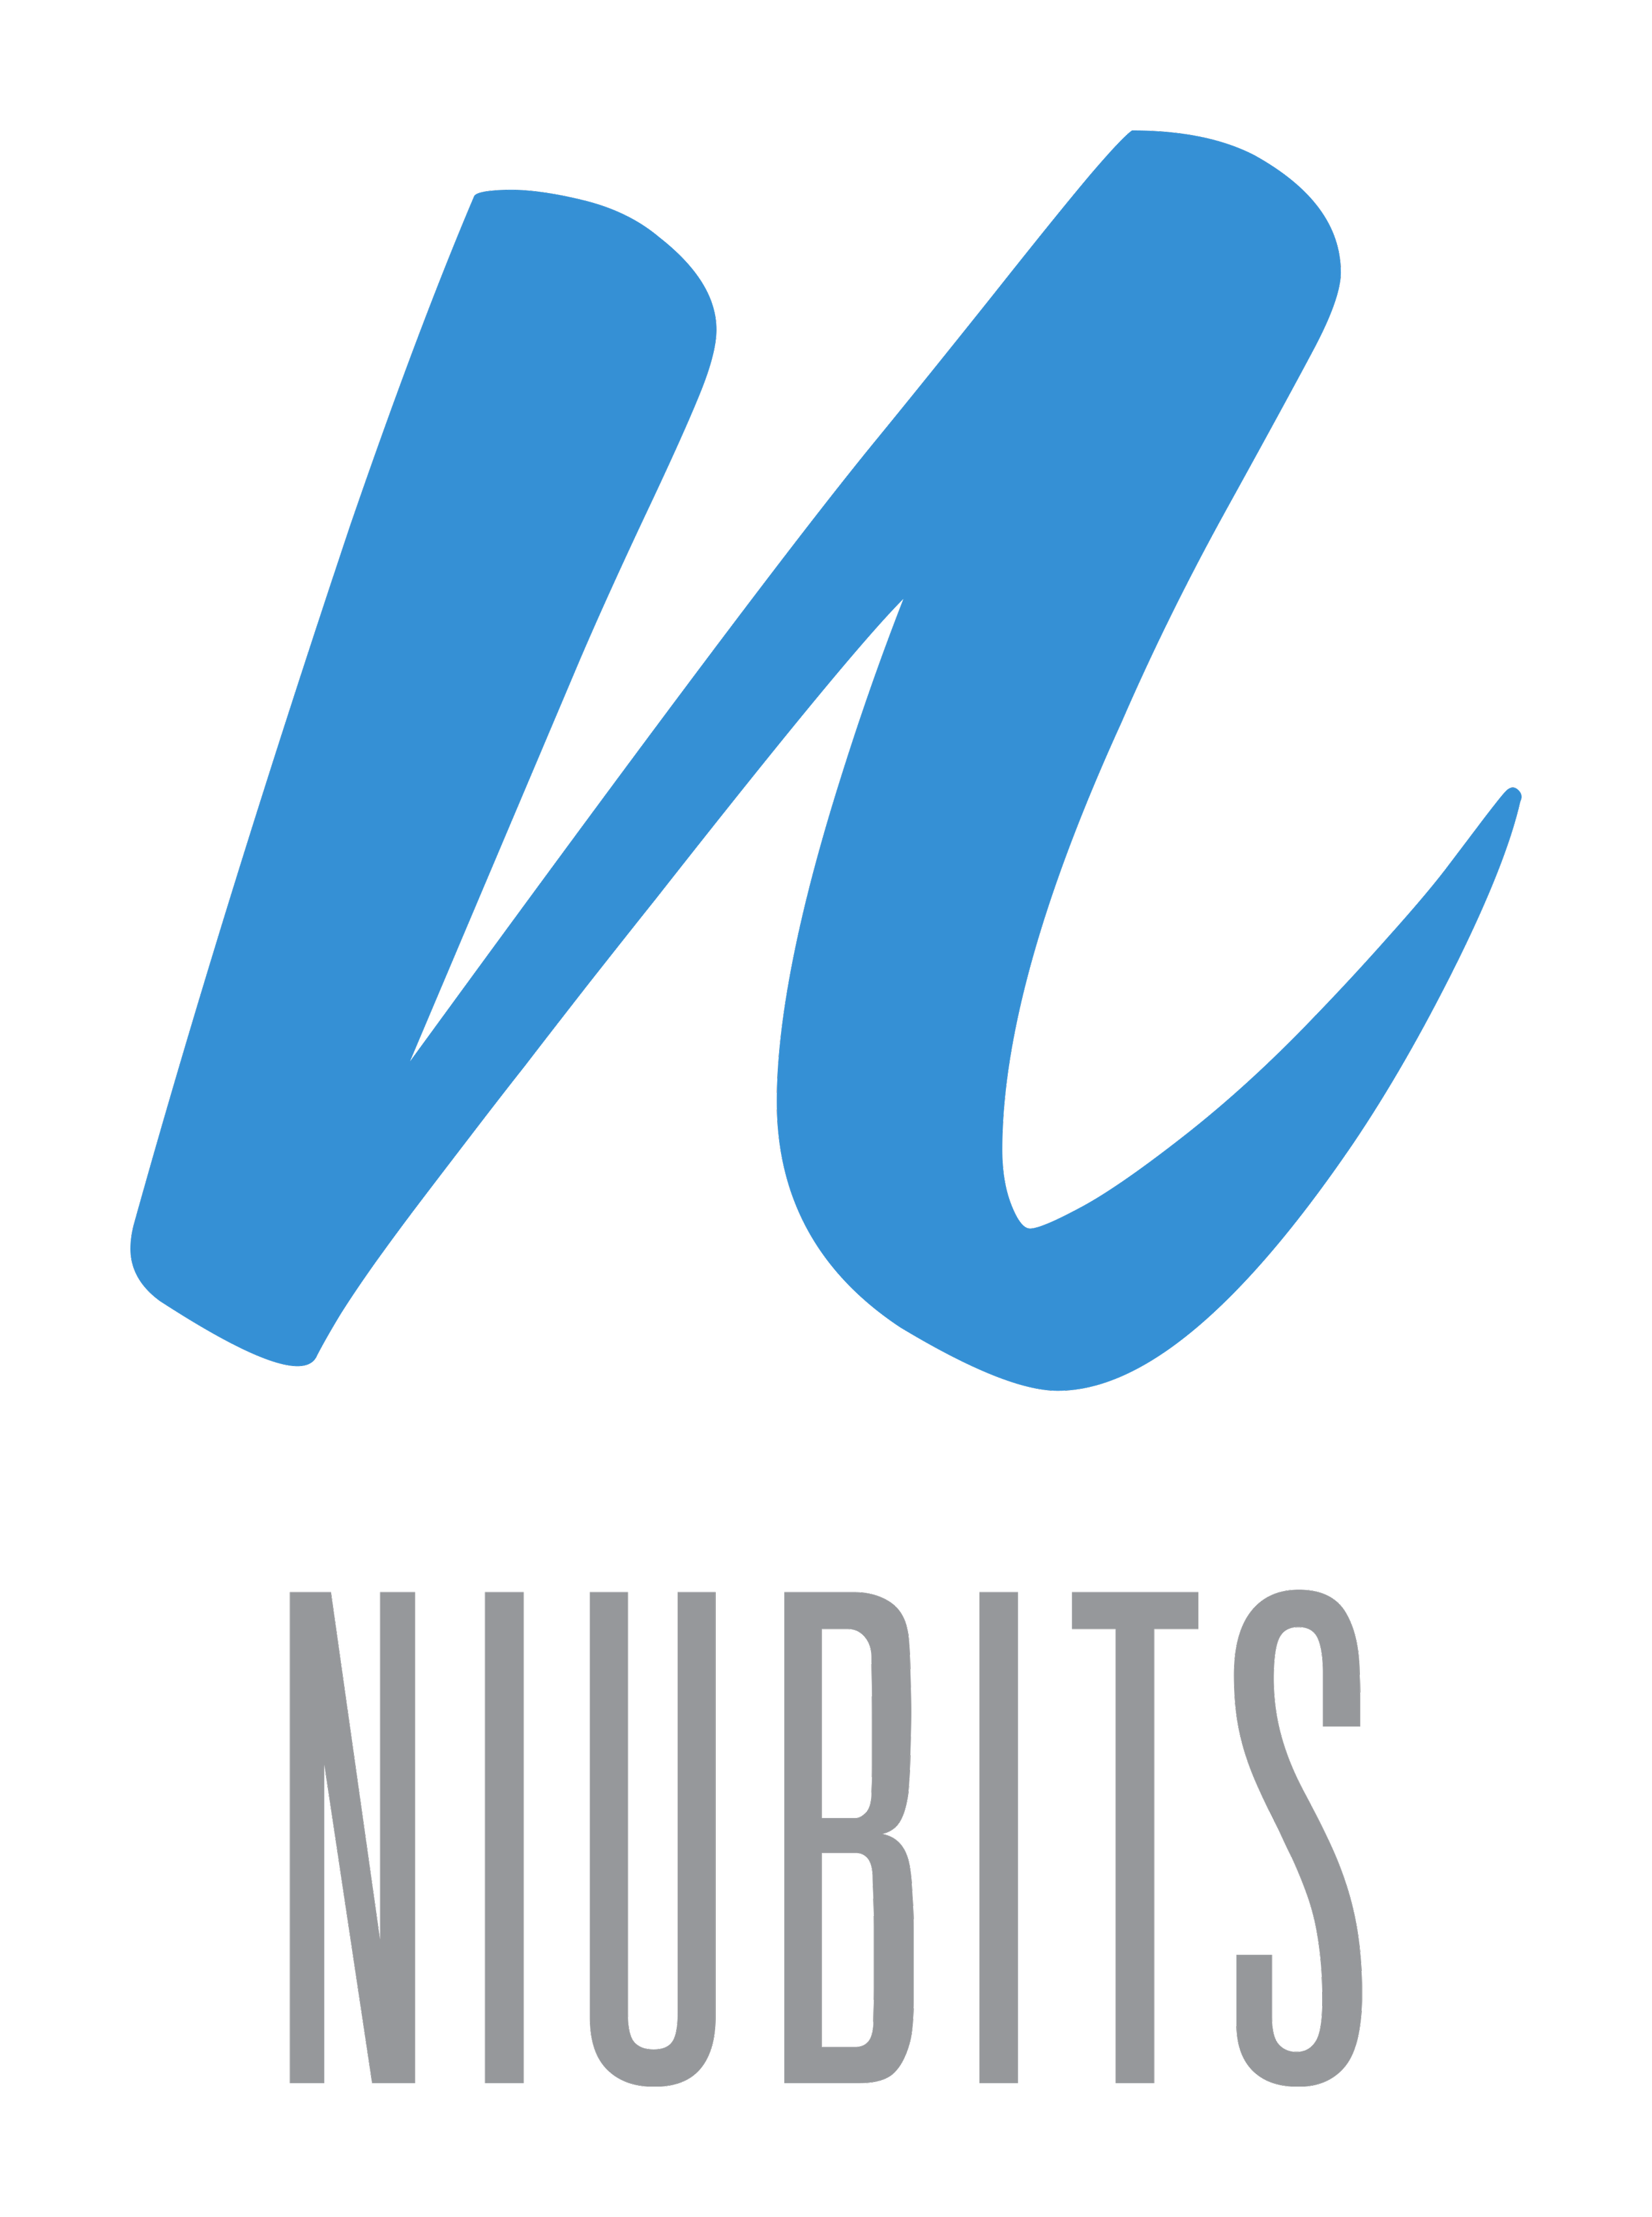 Niubits